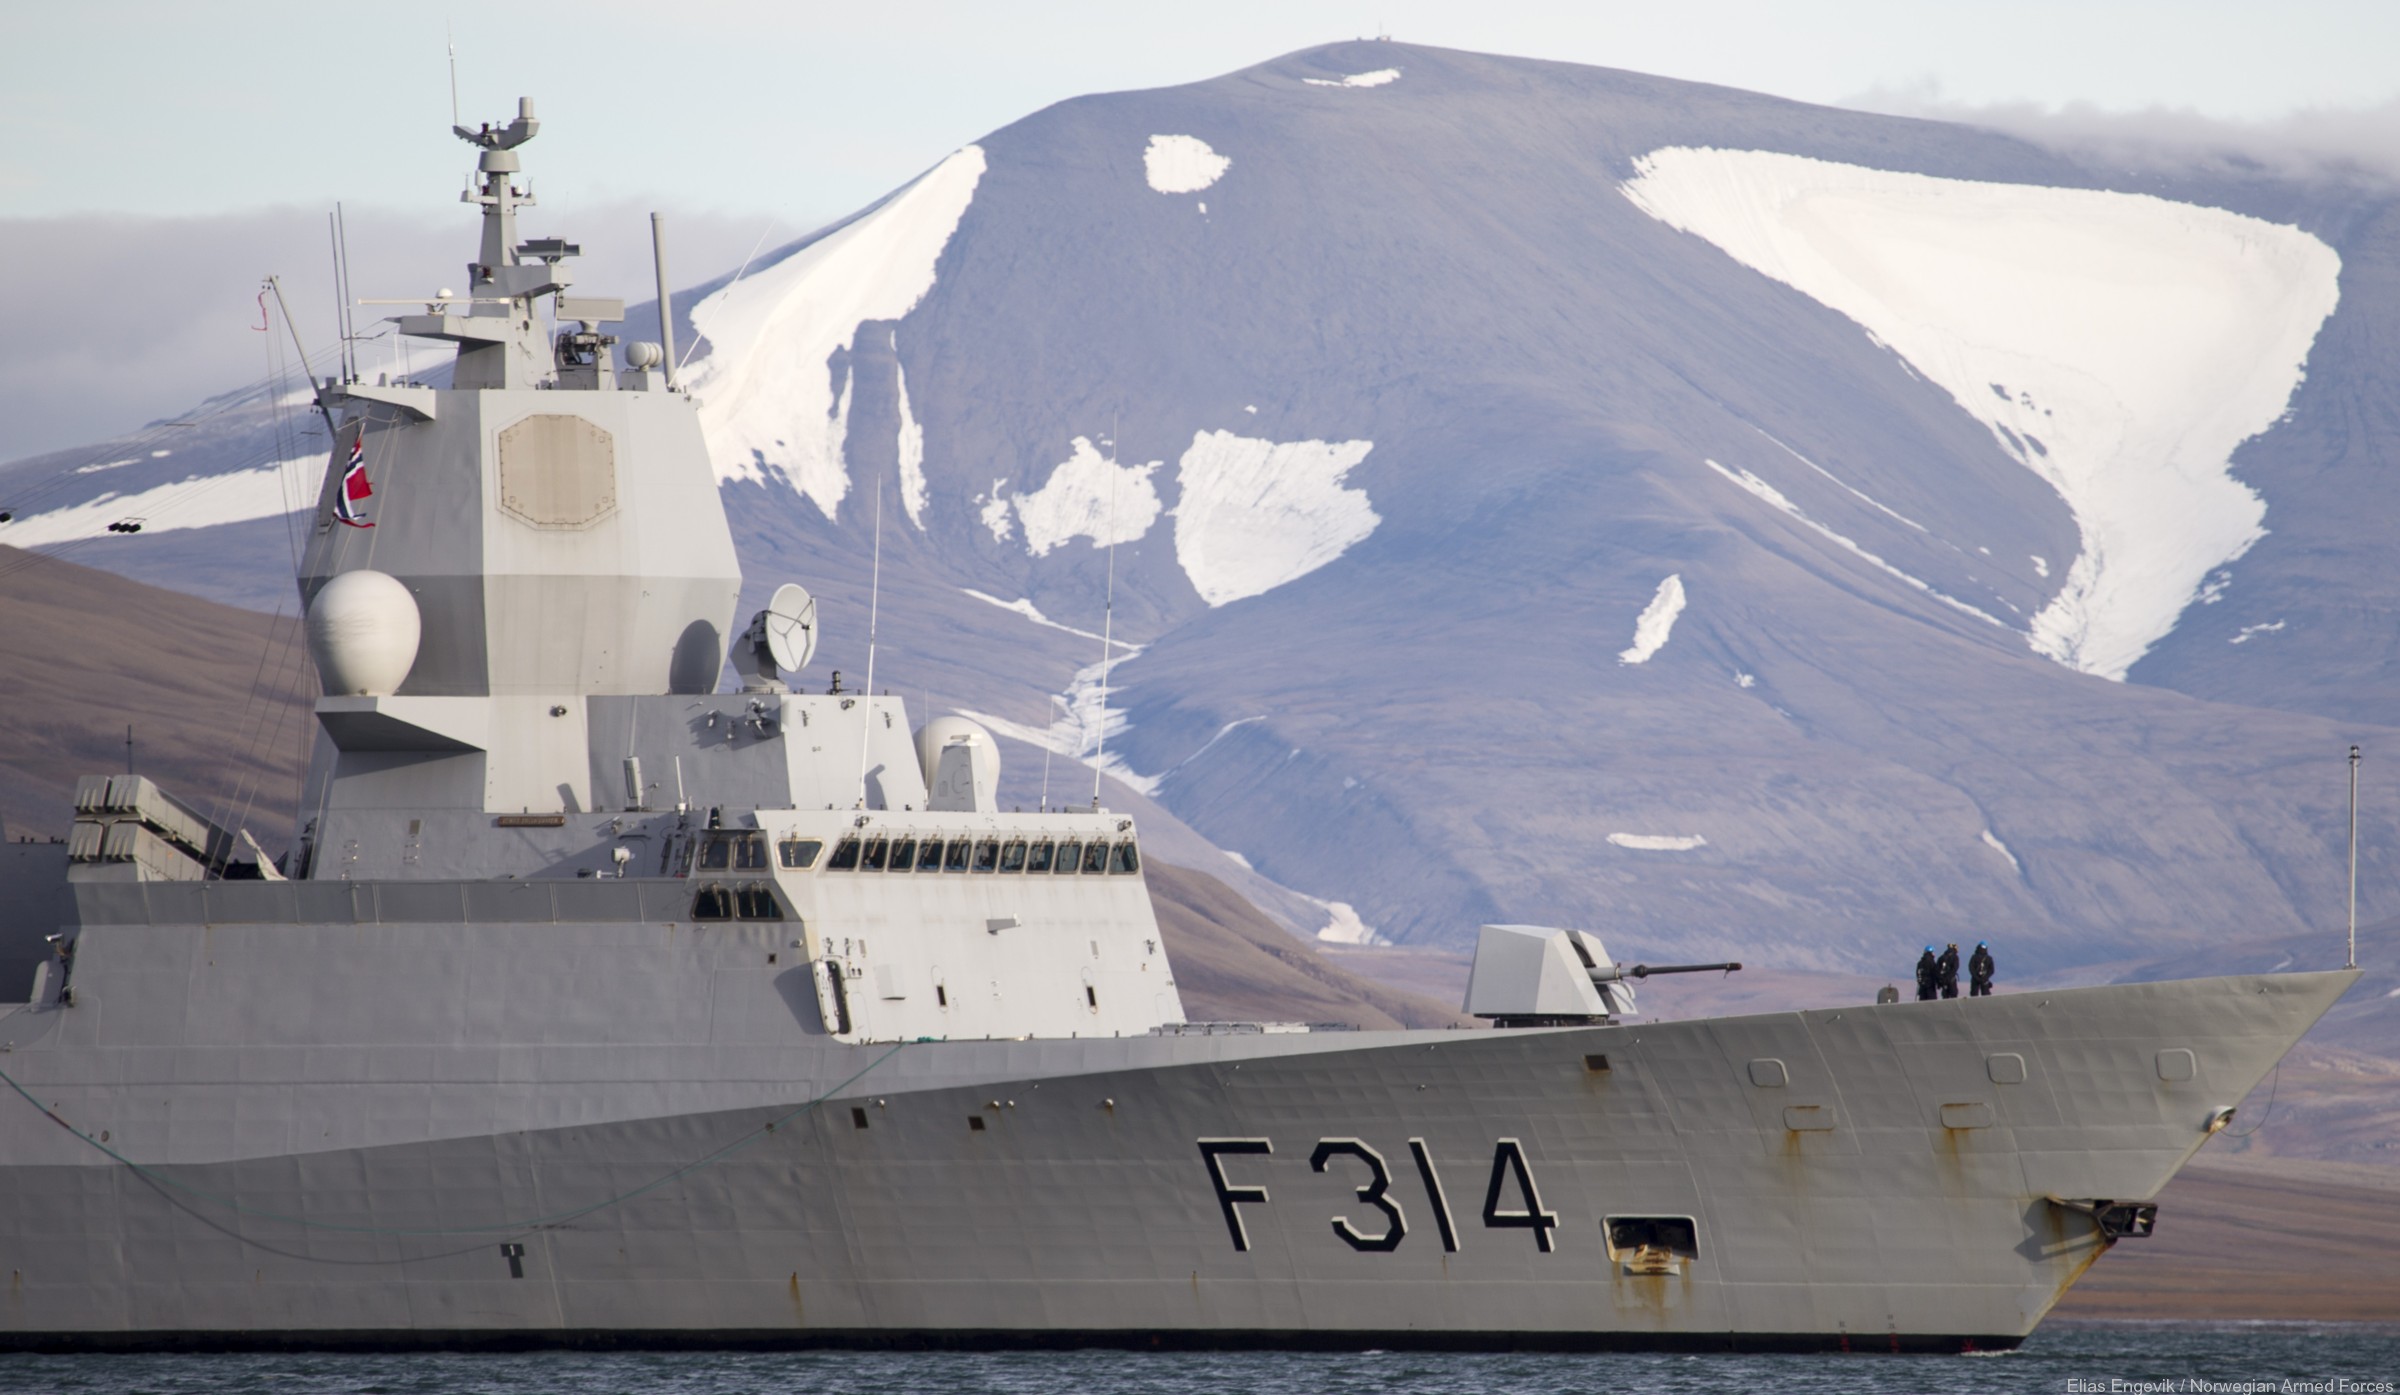 f-314 thor heyerdahl hnoms knm fridtjof nansen class frigate royal norwegian navy 37